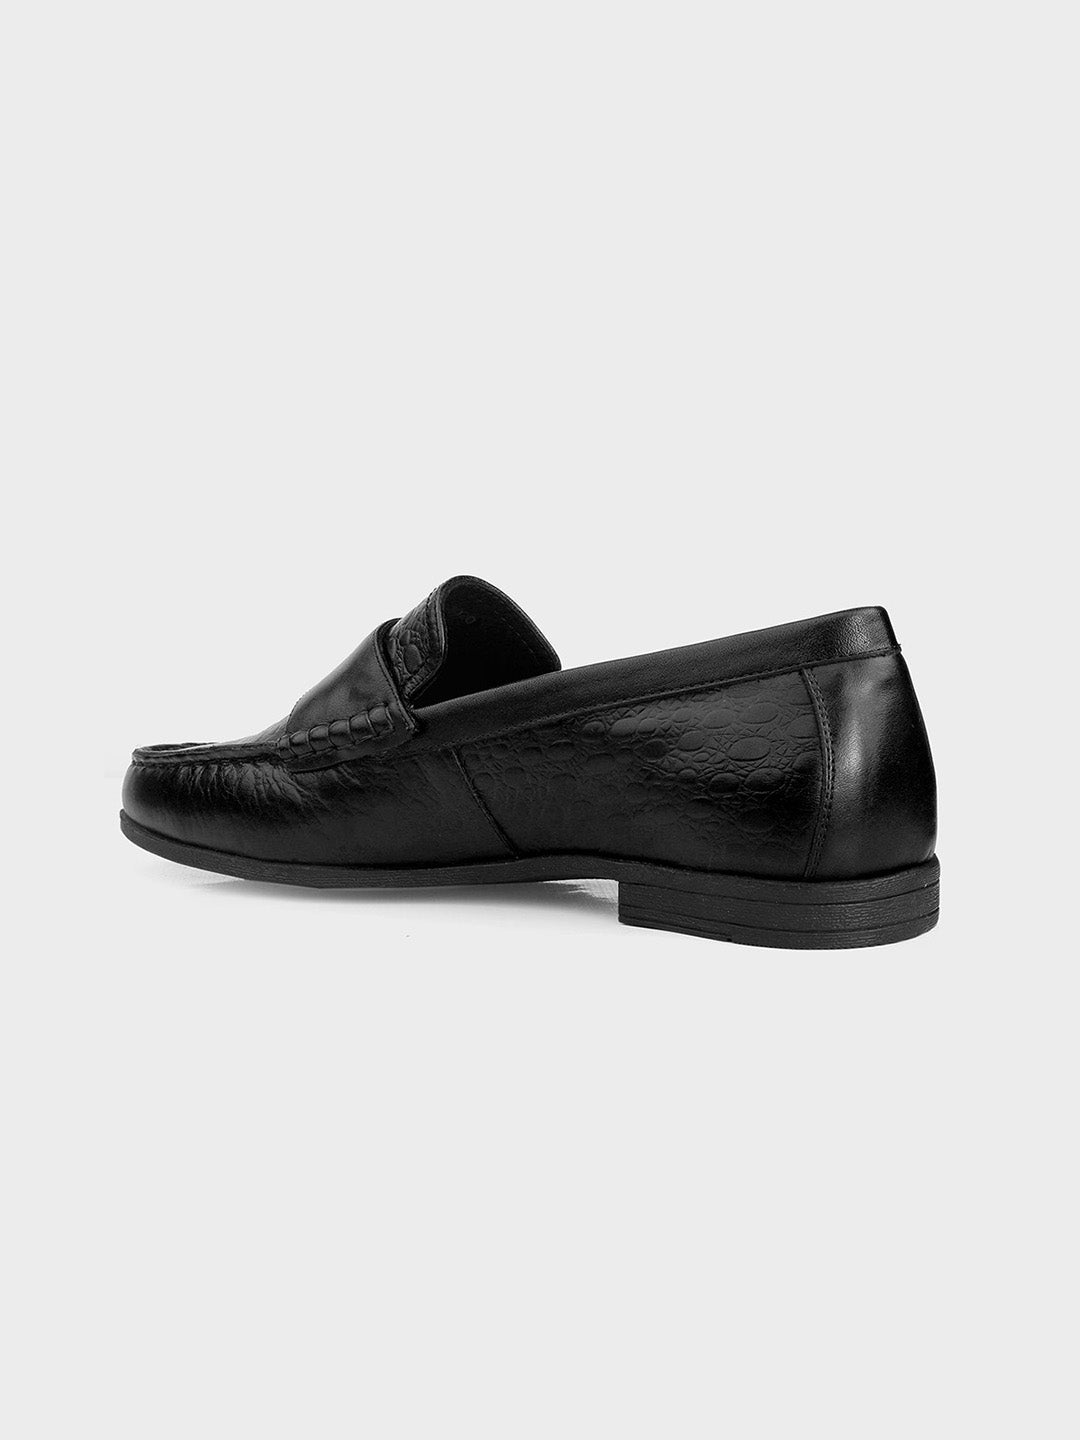 Men's Black Leather Slip-on Monk Shoes